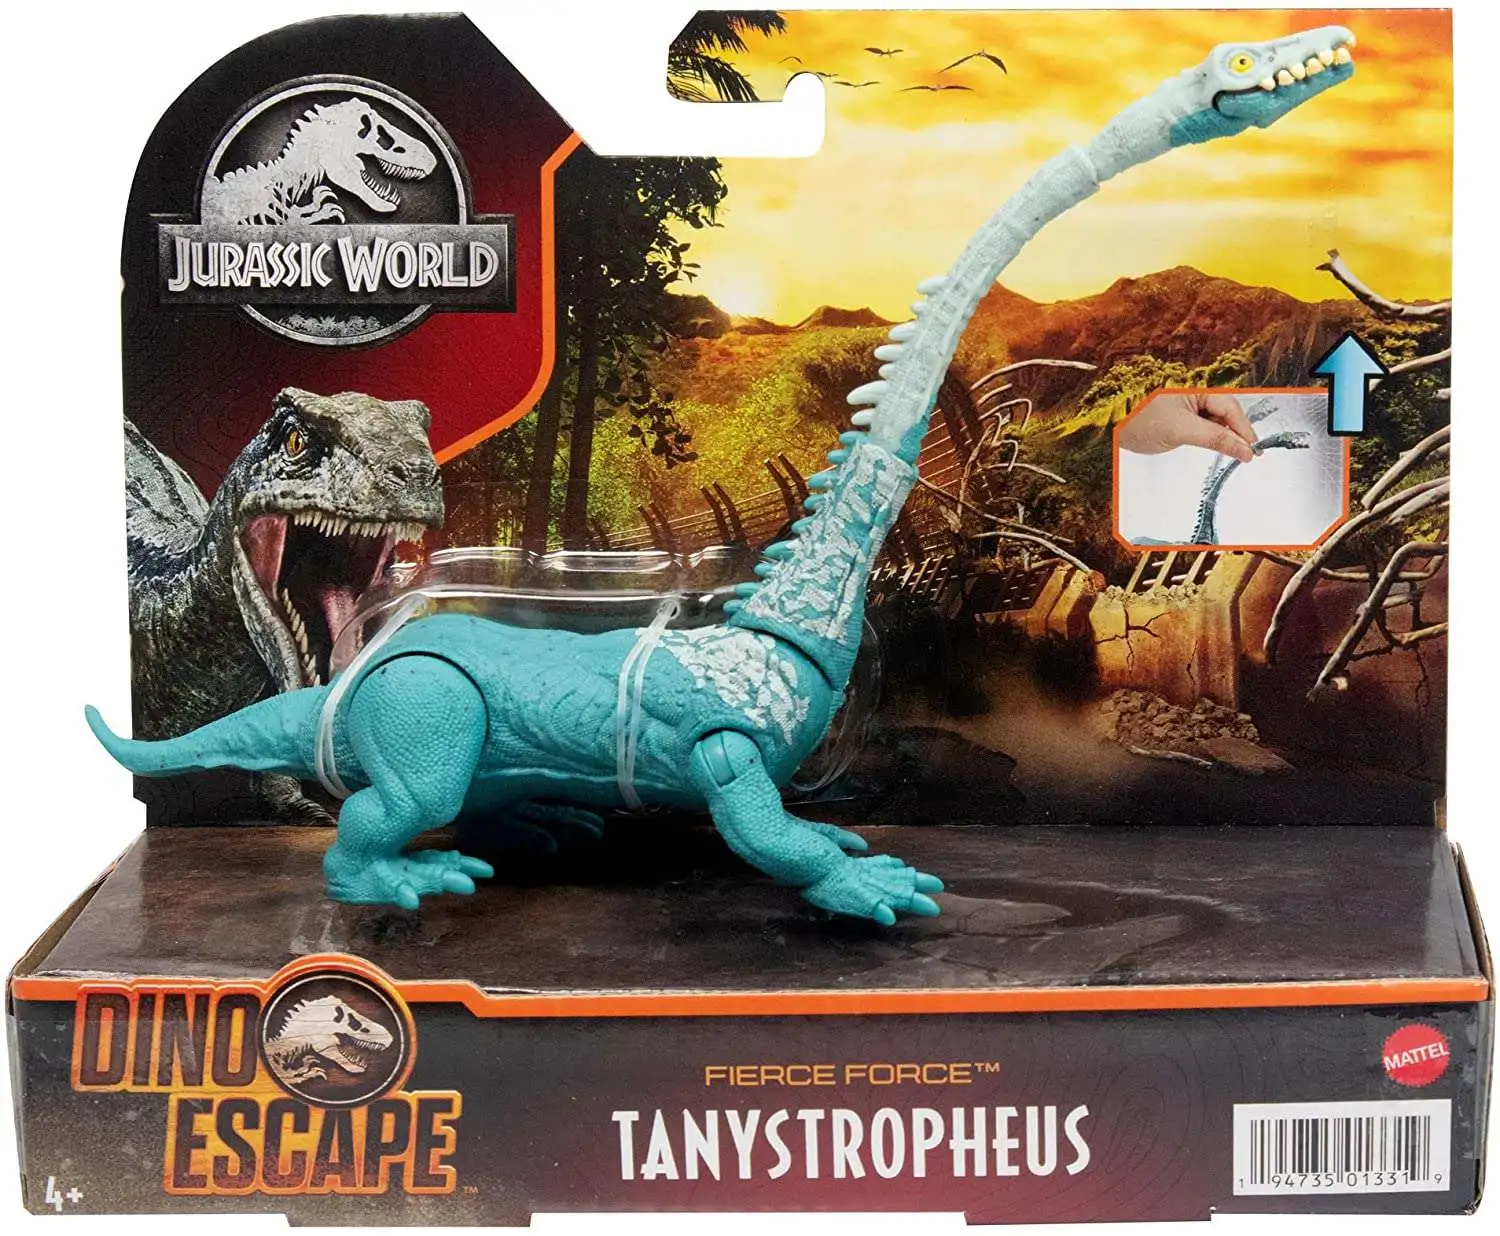 Jurassic World Fierce Force Tanystropheus Action Figure [Dino Escape]